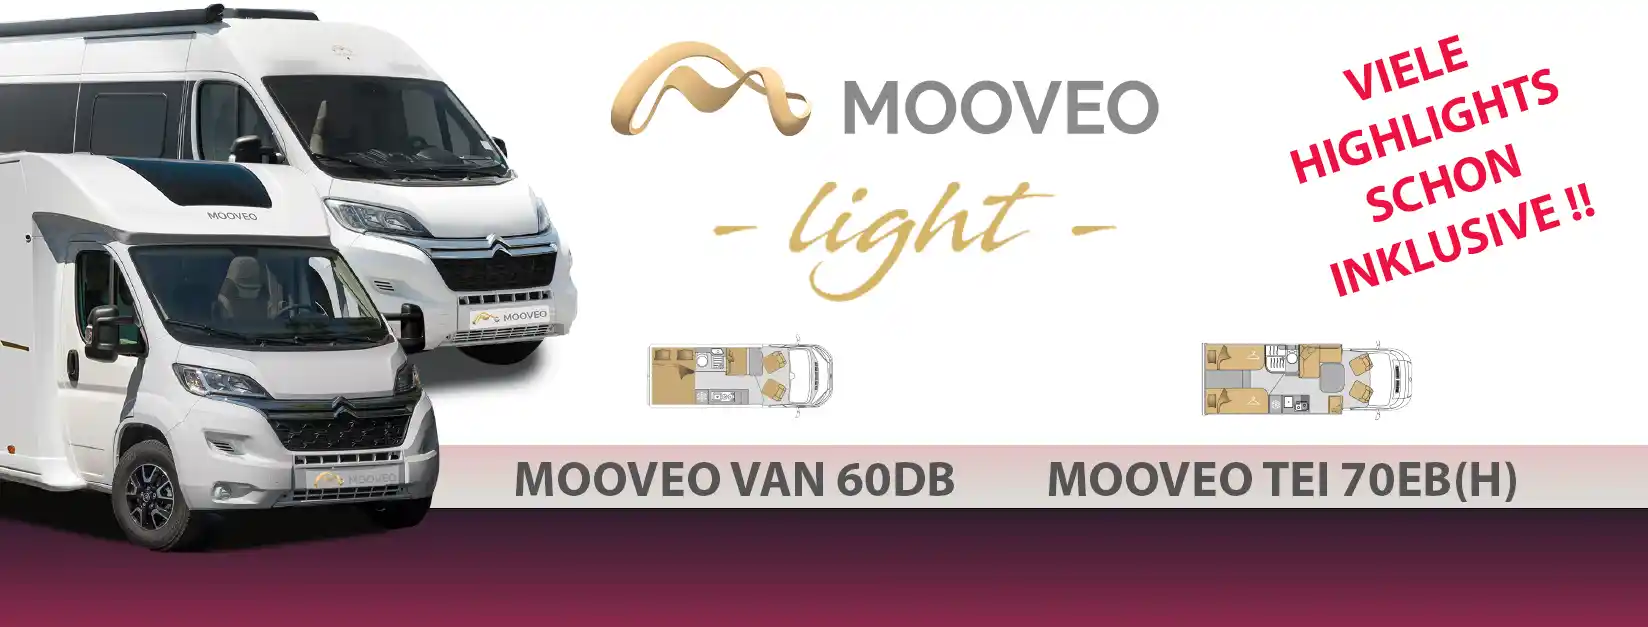 Wohnmobile-Konfigurator_Mooveo-light_01